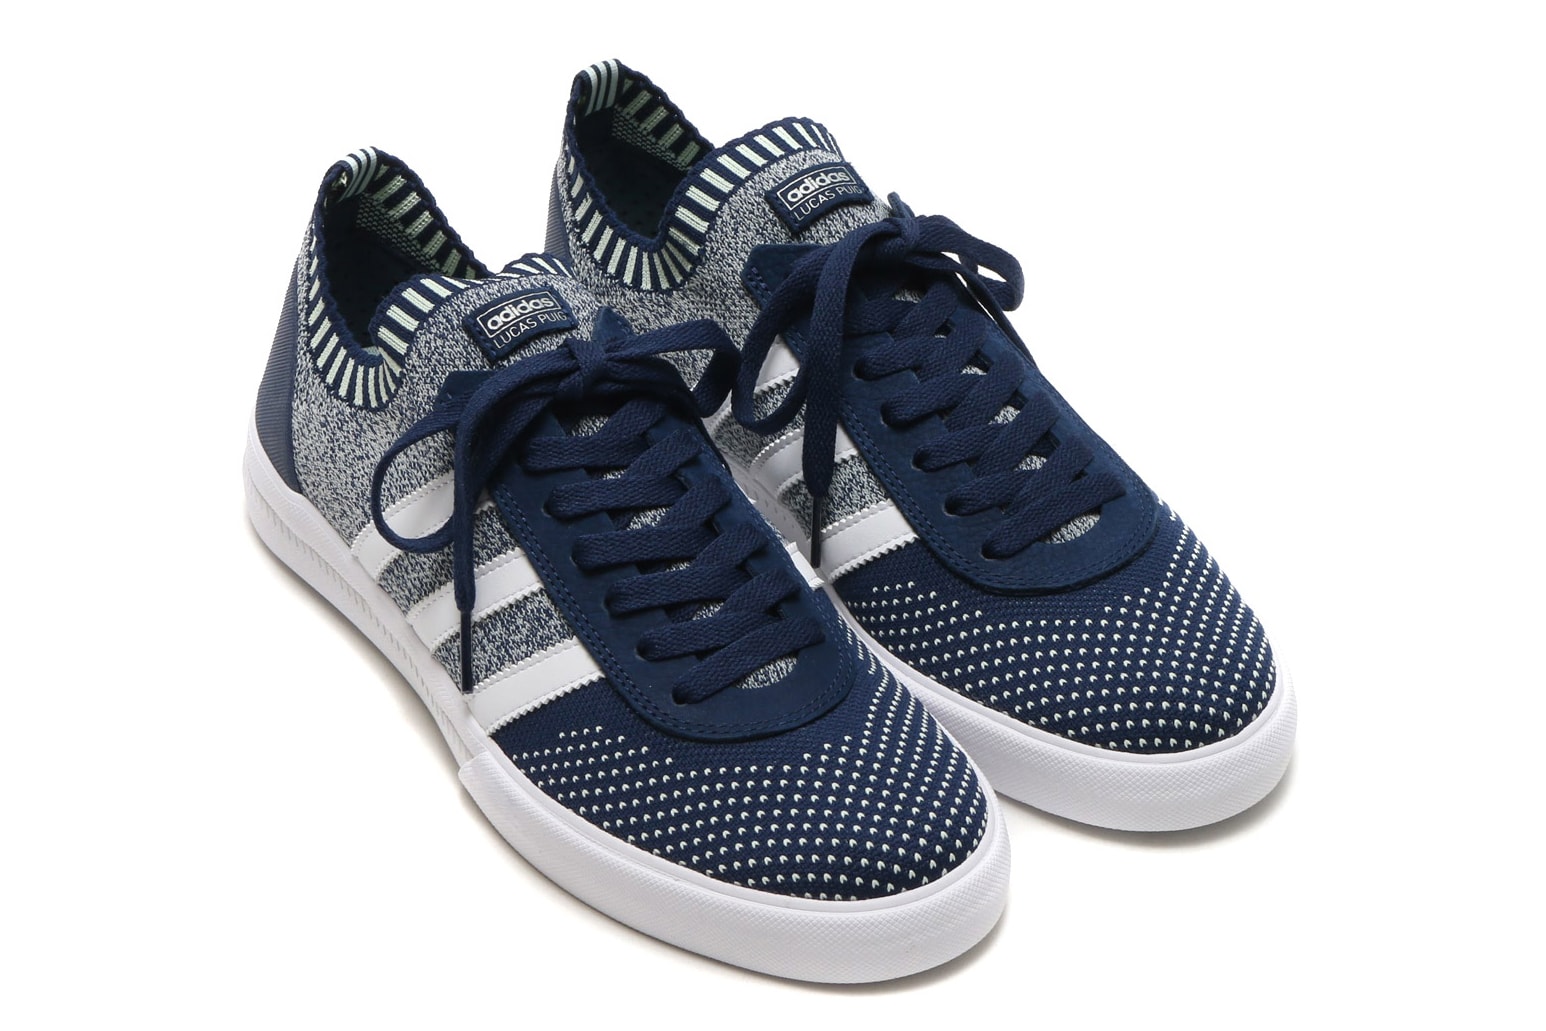 adidas Lucas Puig Lucas Premiere ADV Primeknit sneaker shoe release date drop primeknit skateboarding